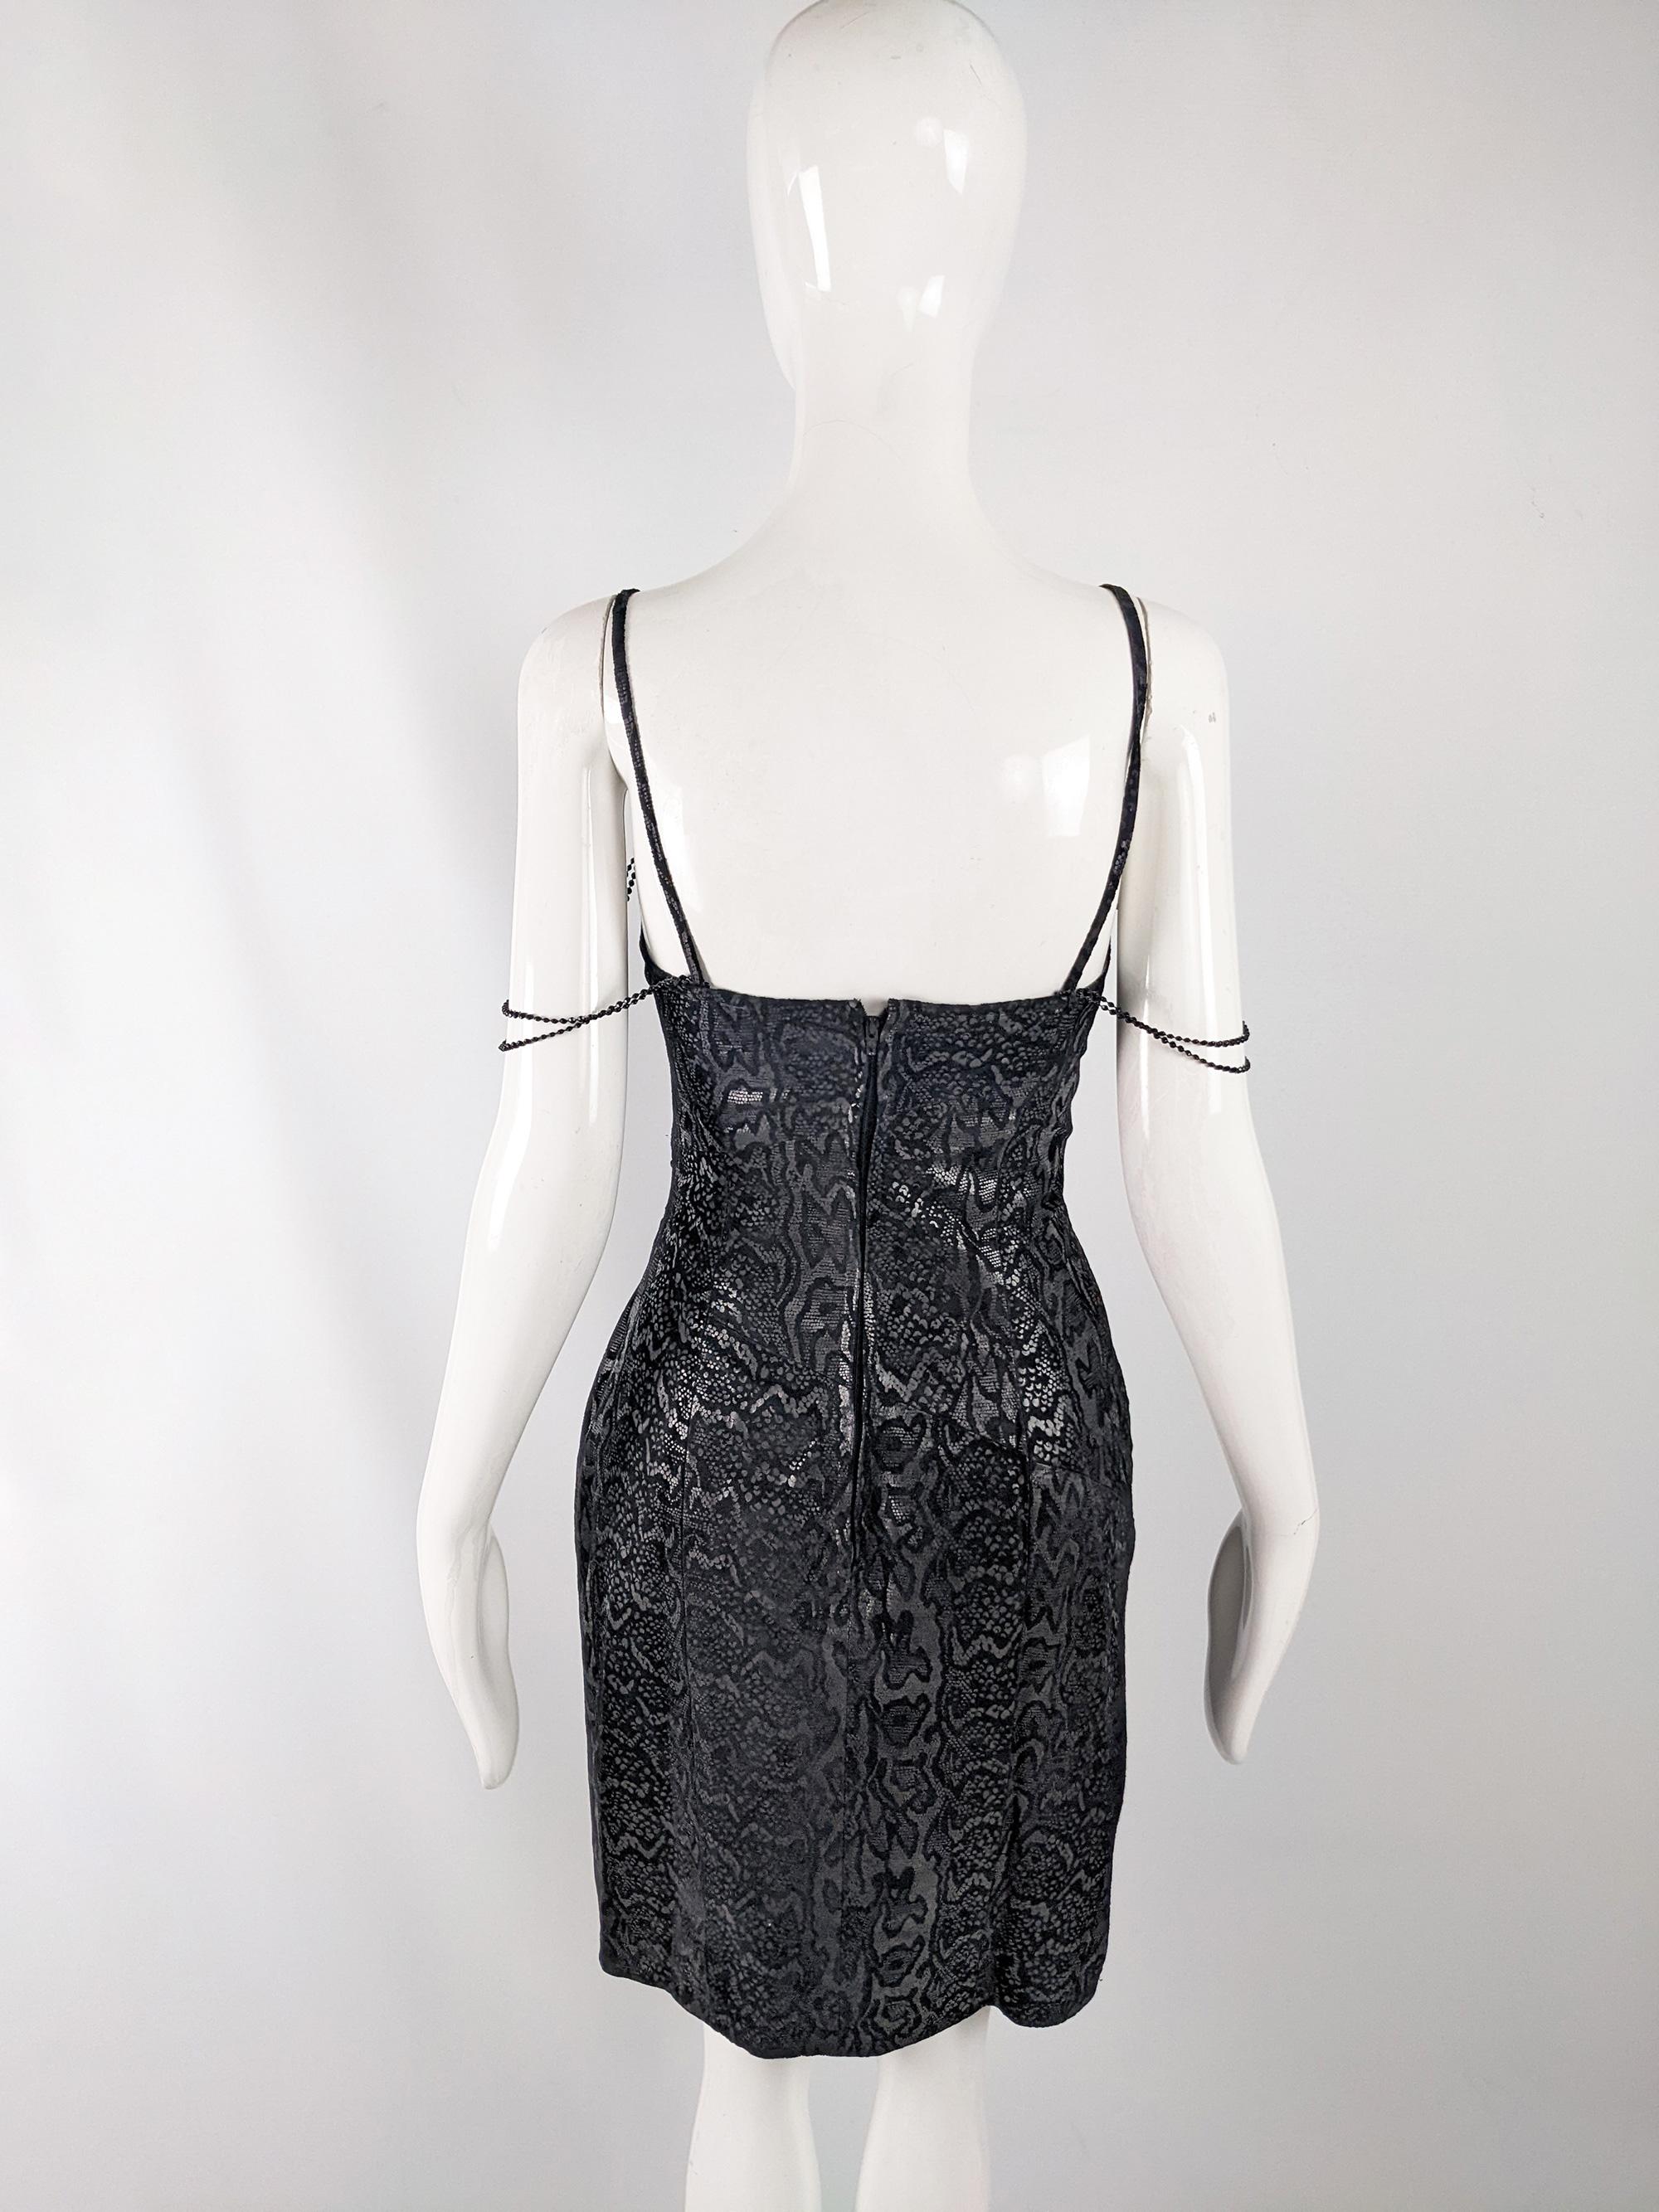 Jacques Sac Vintage Black Leather Snakeskin Print Sequin Real Leather Dress 4